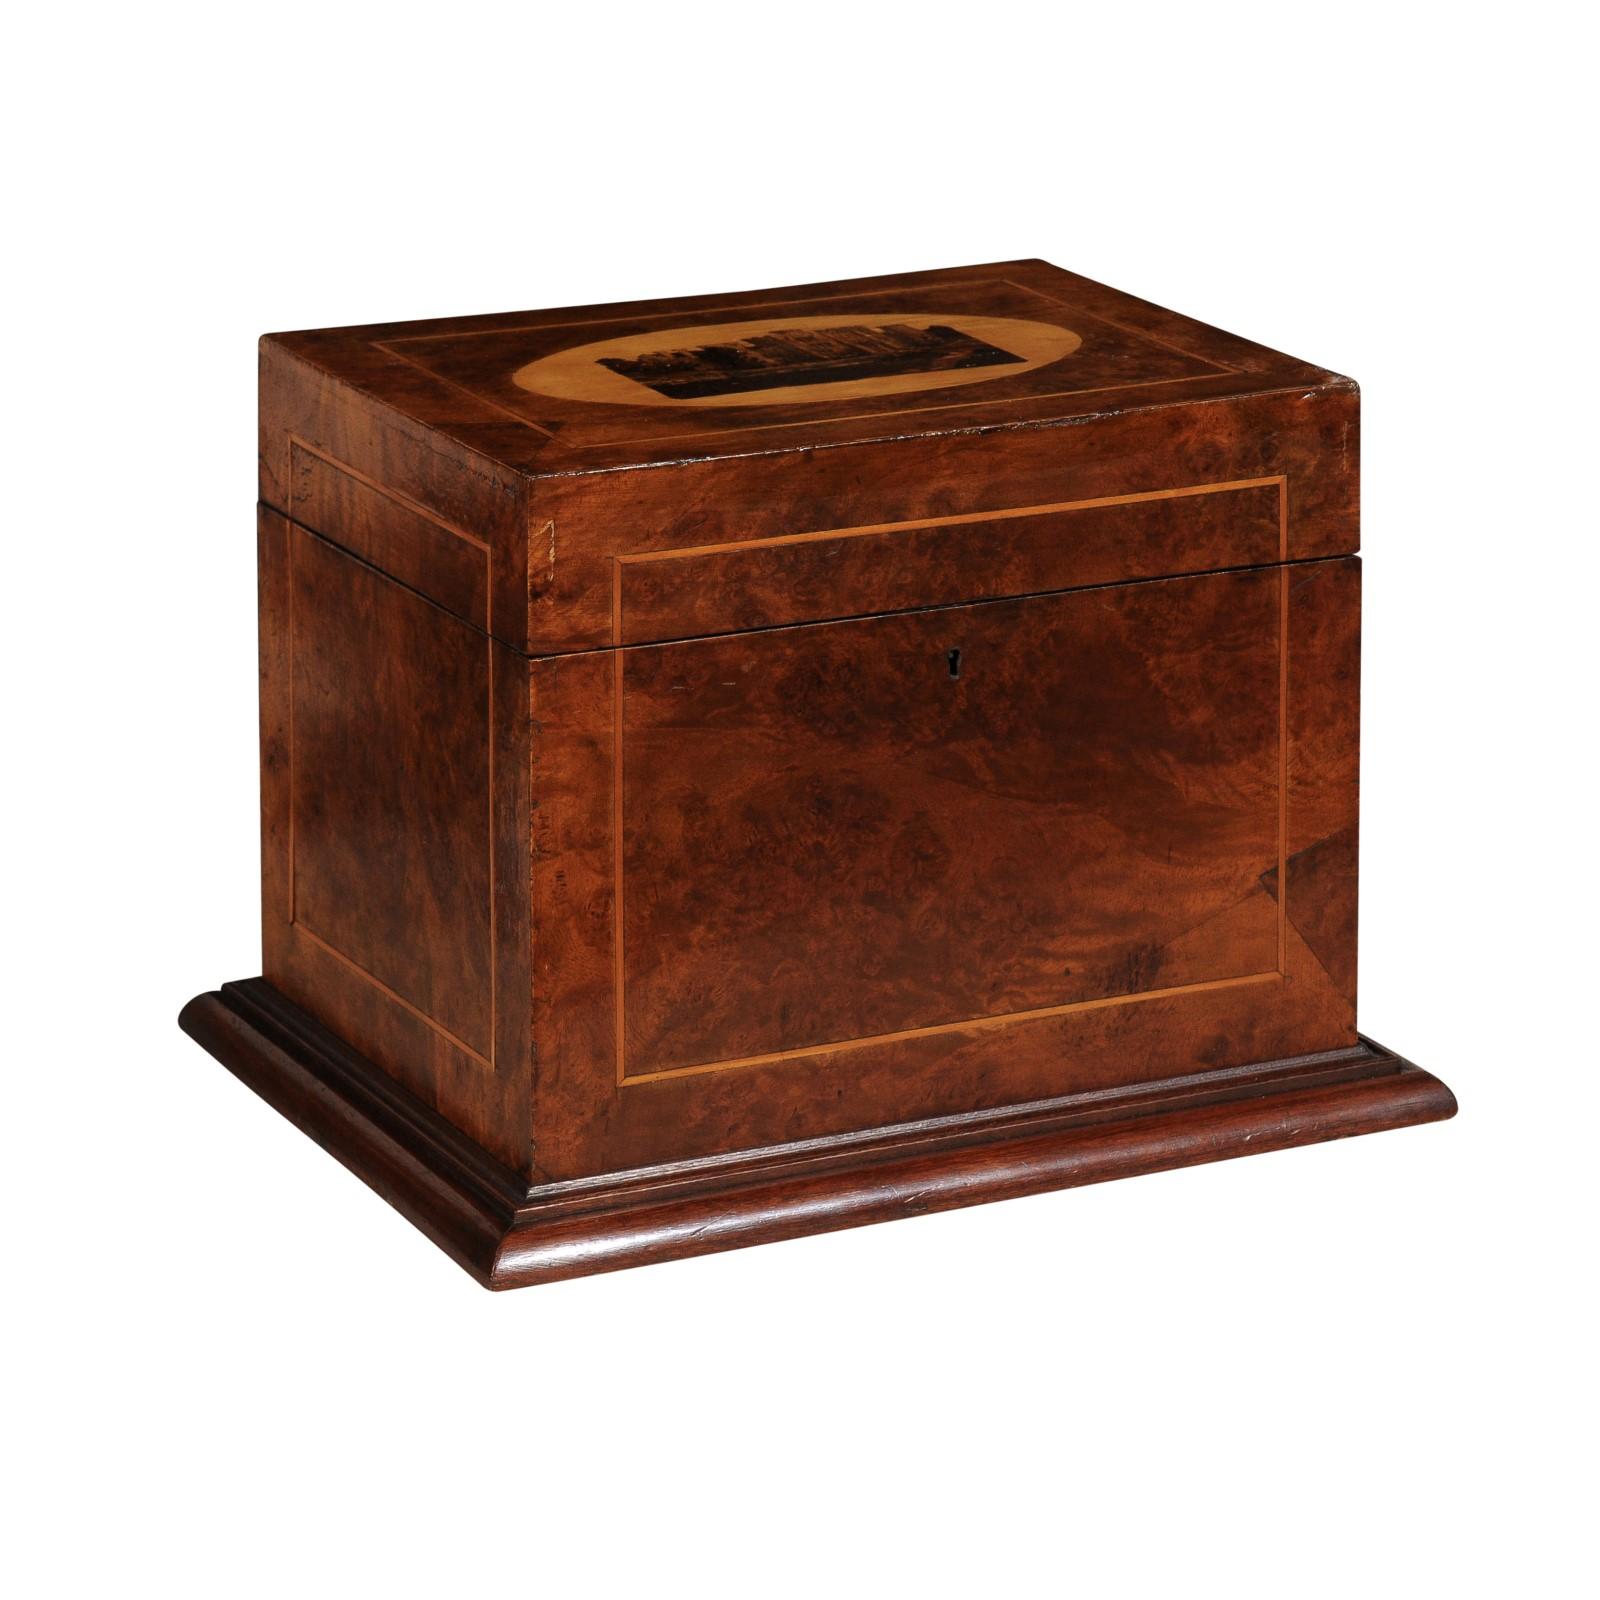 English 19th Century Tunbridge Ware Dresser Top Jewelry Box with Castle Decor